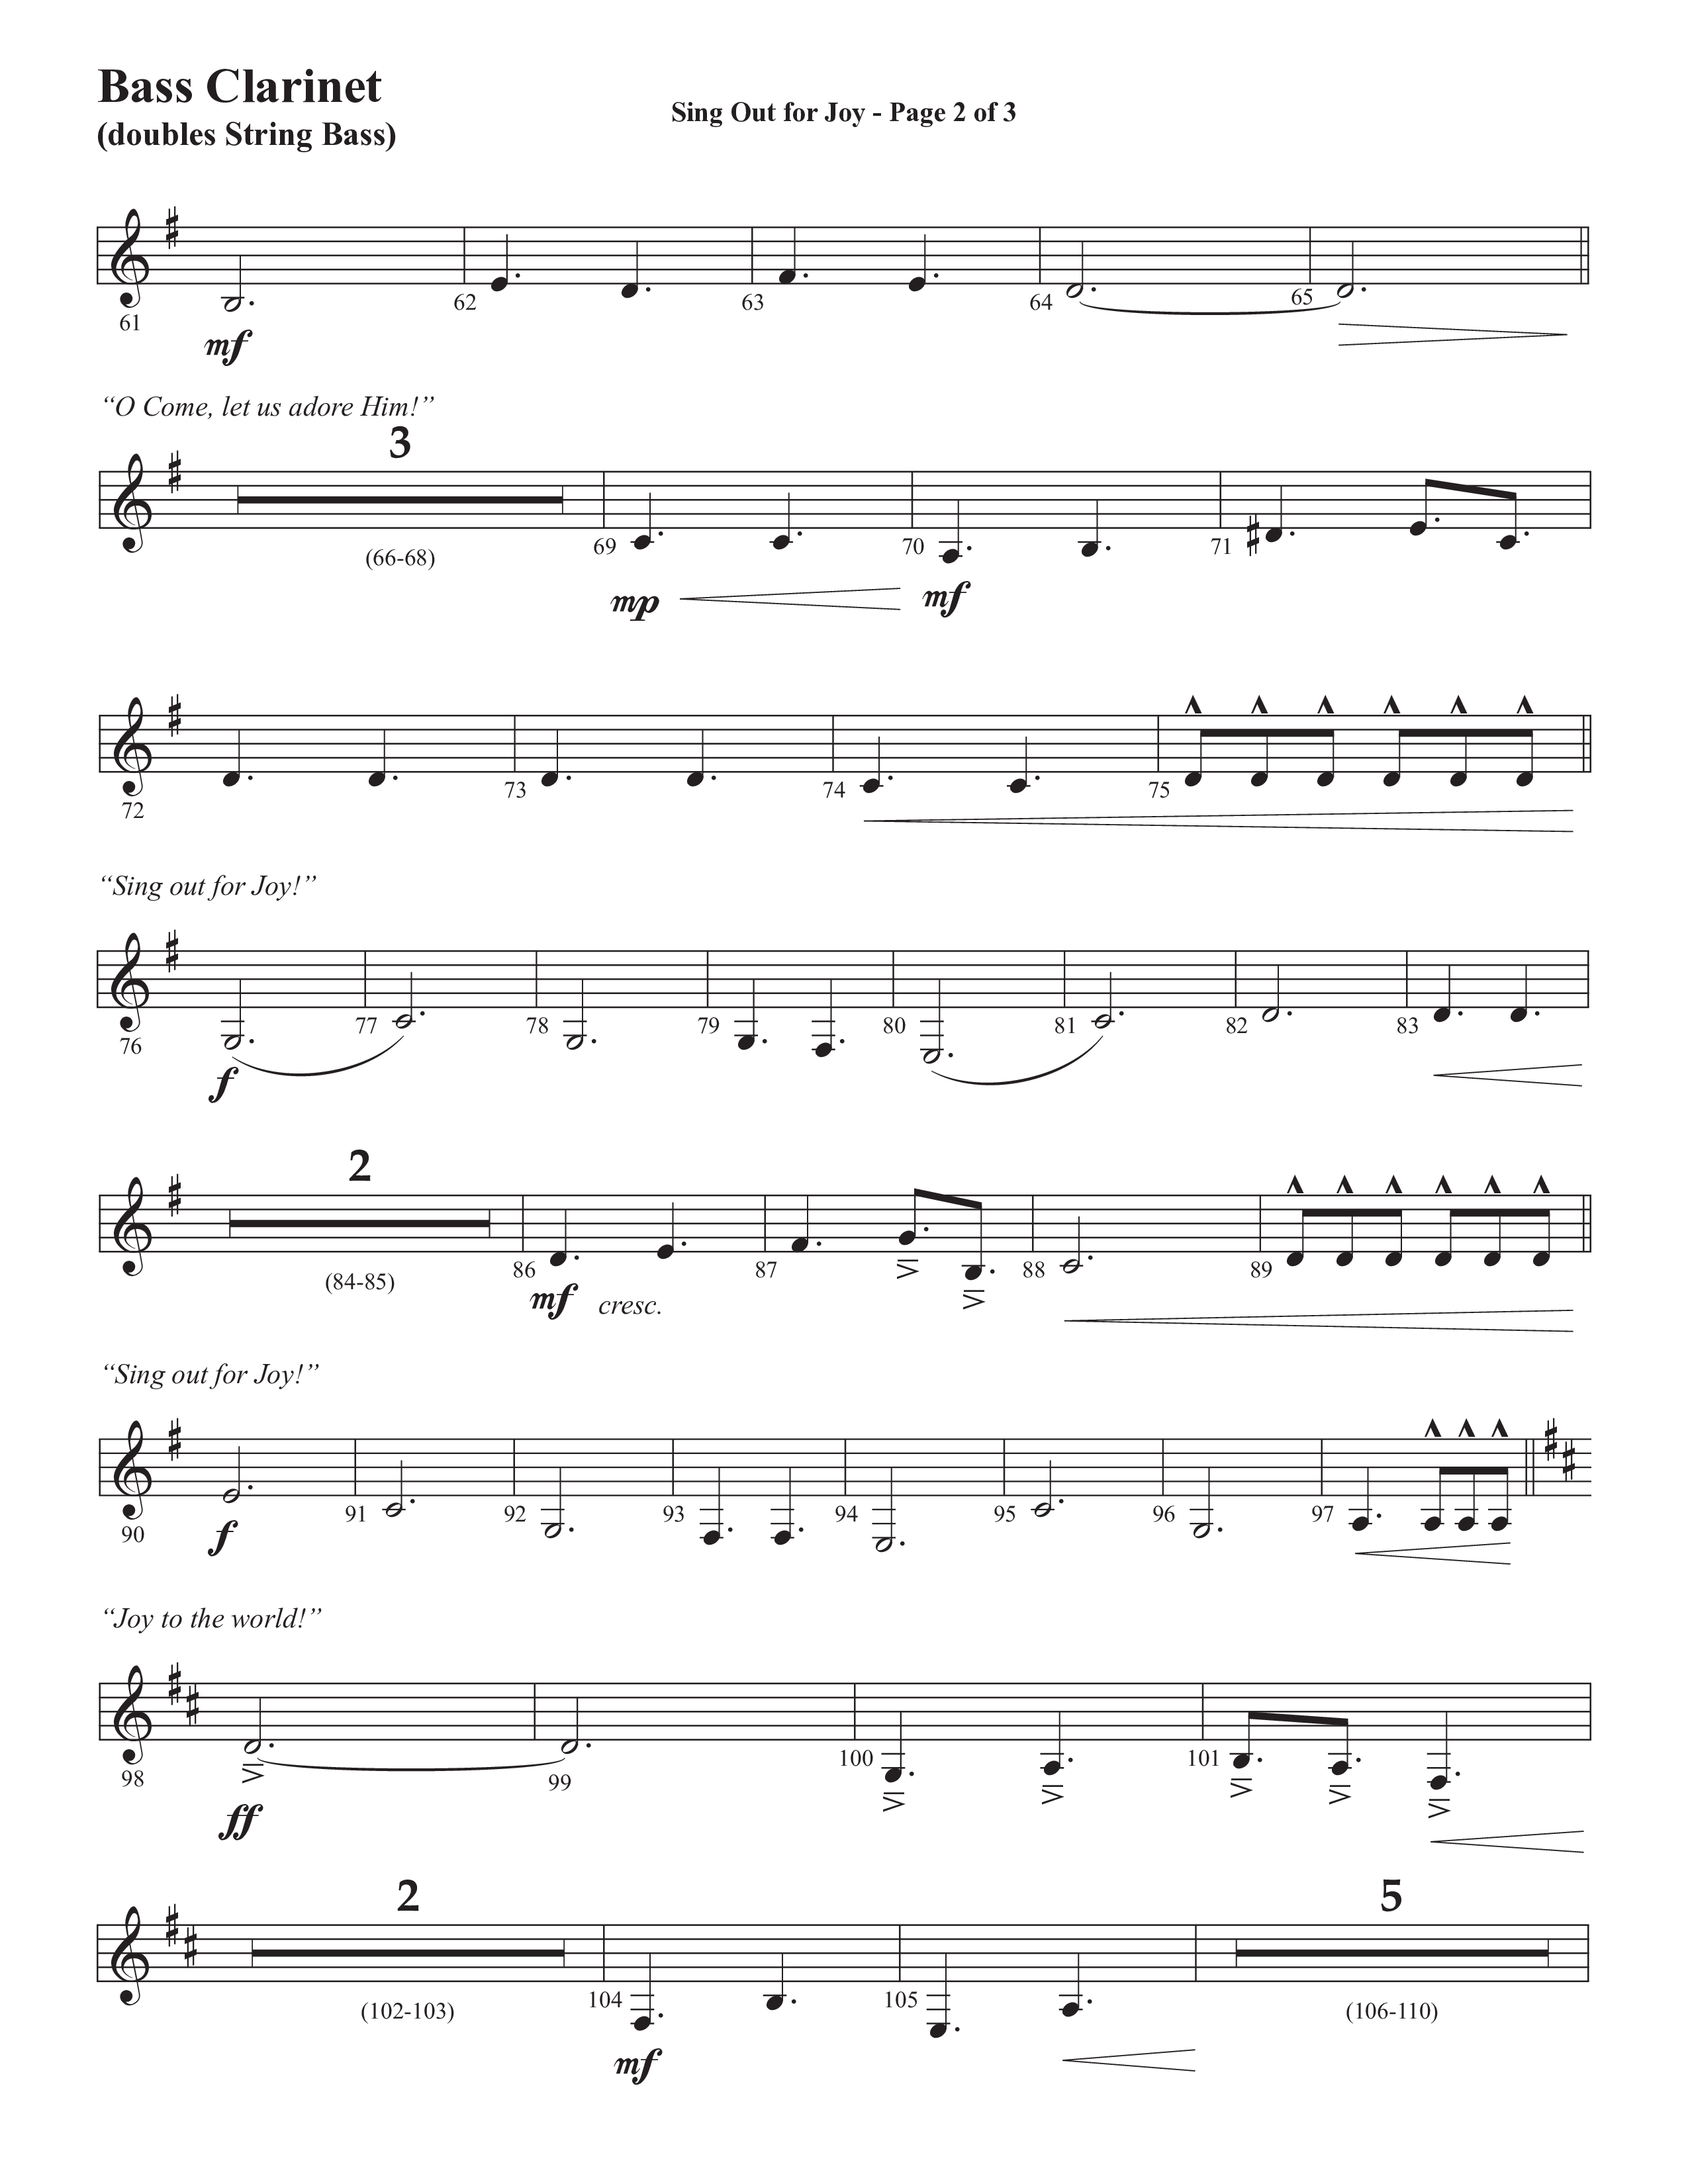 Sing Out For Joy (Choral Anthem SATB) Bass Clarinet (Semsen Music / Arr. John Bolin / Orch. Cliff Duren)